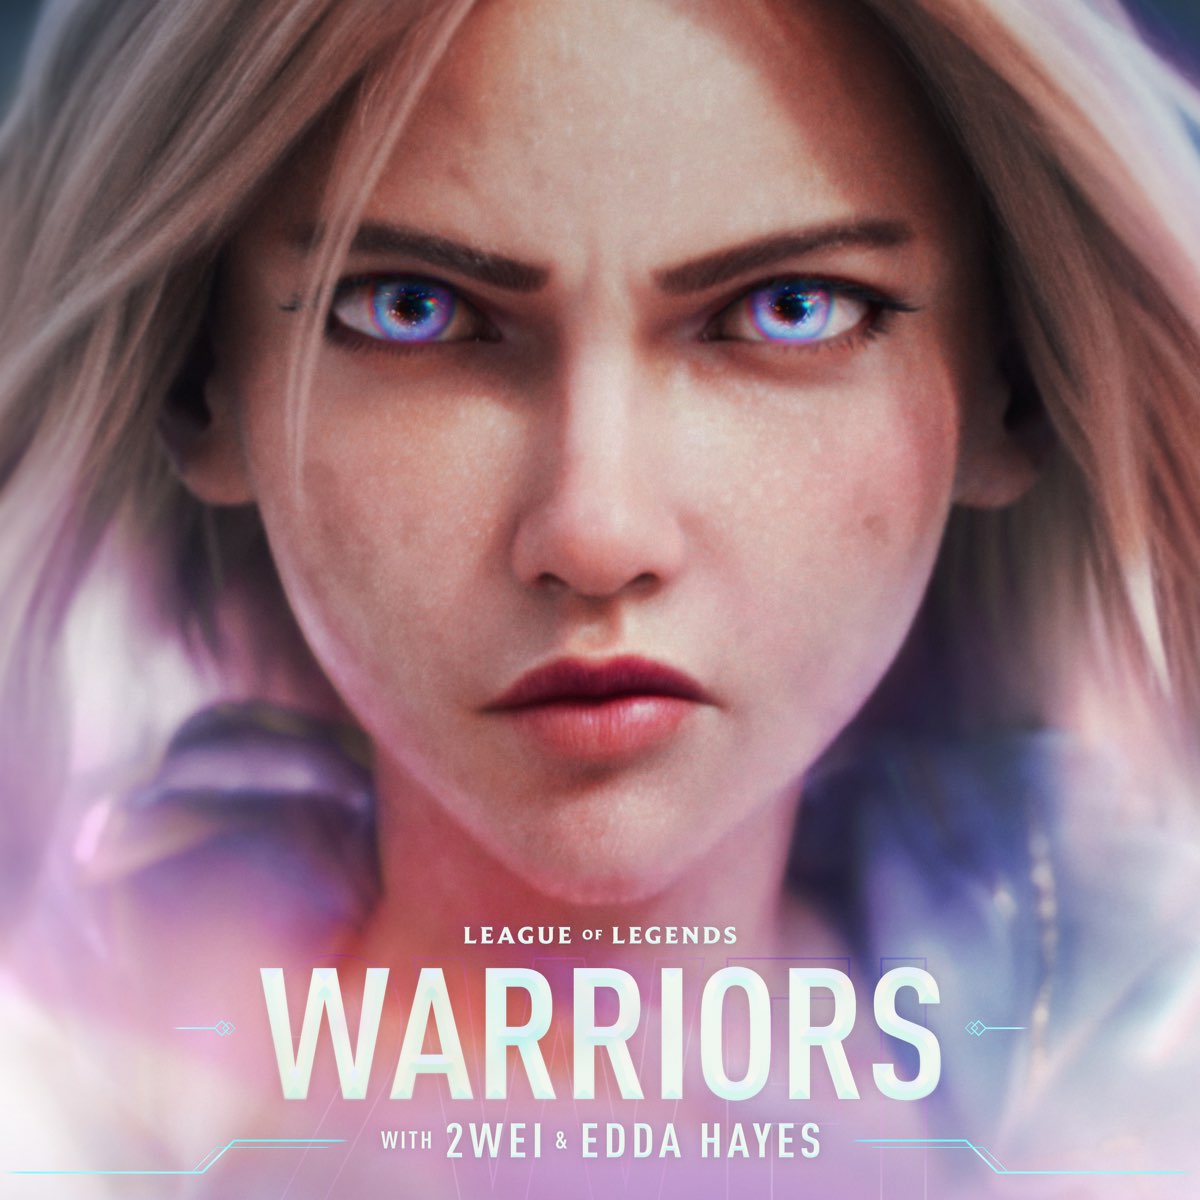 ‎Warriors Single by League of Legends, 2WEI & Edda Hayes on Apple Music